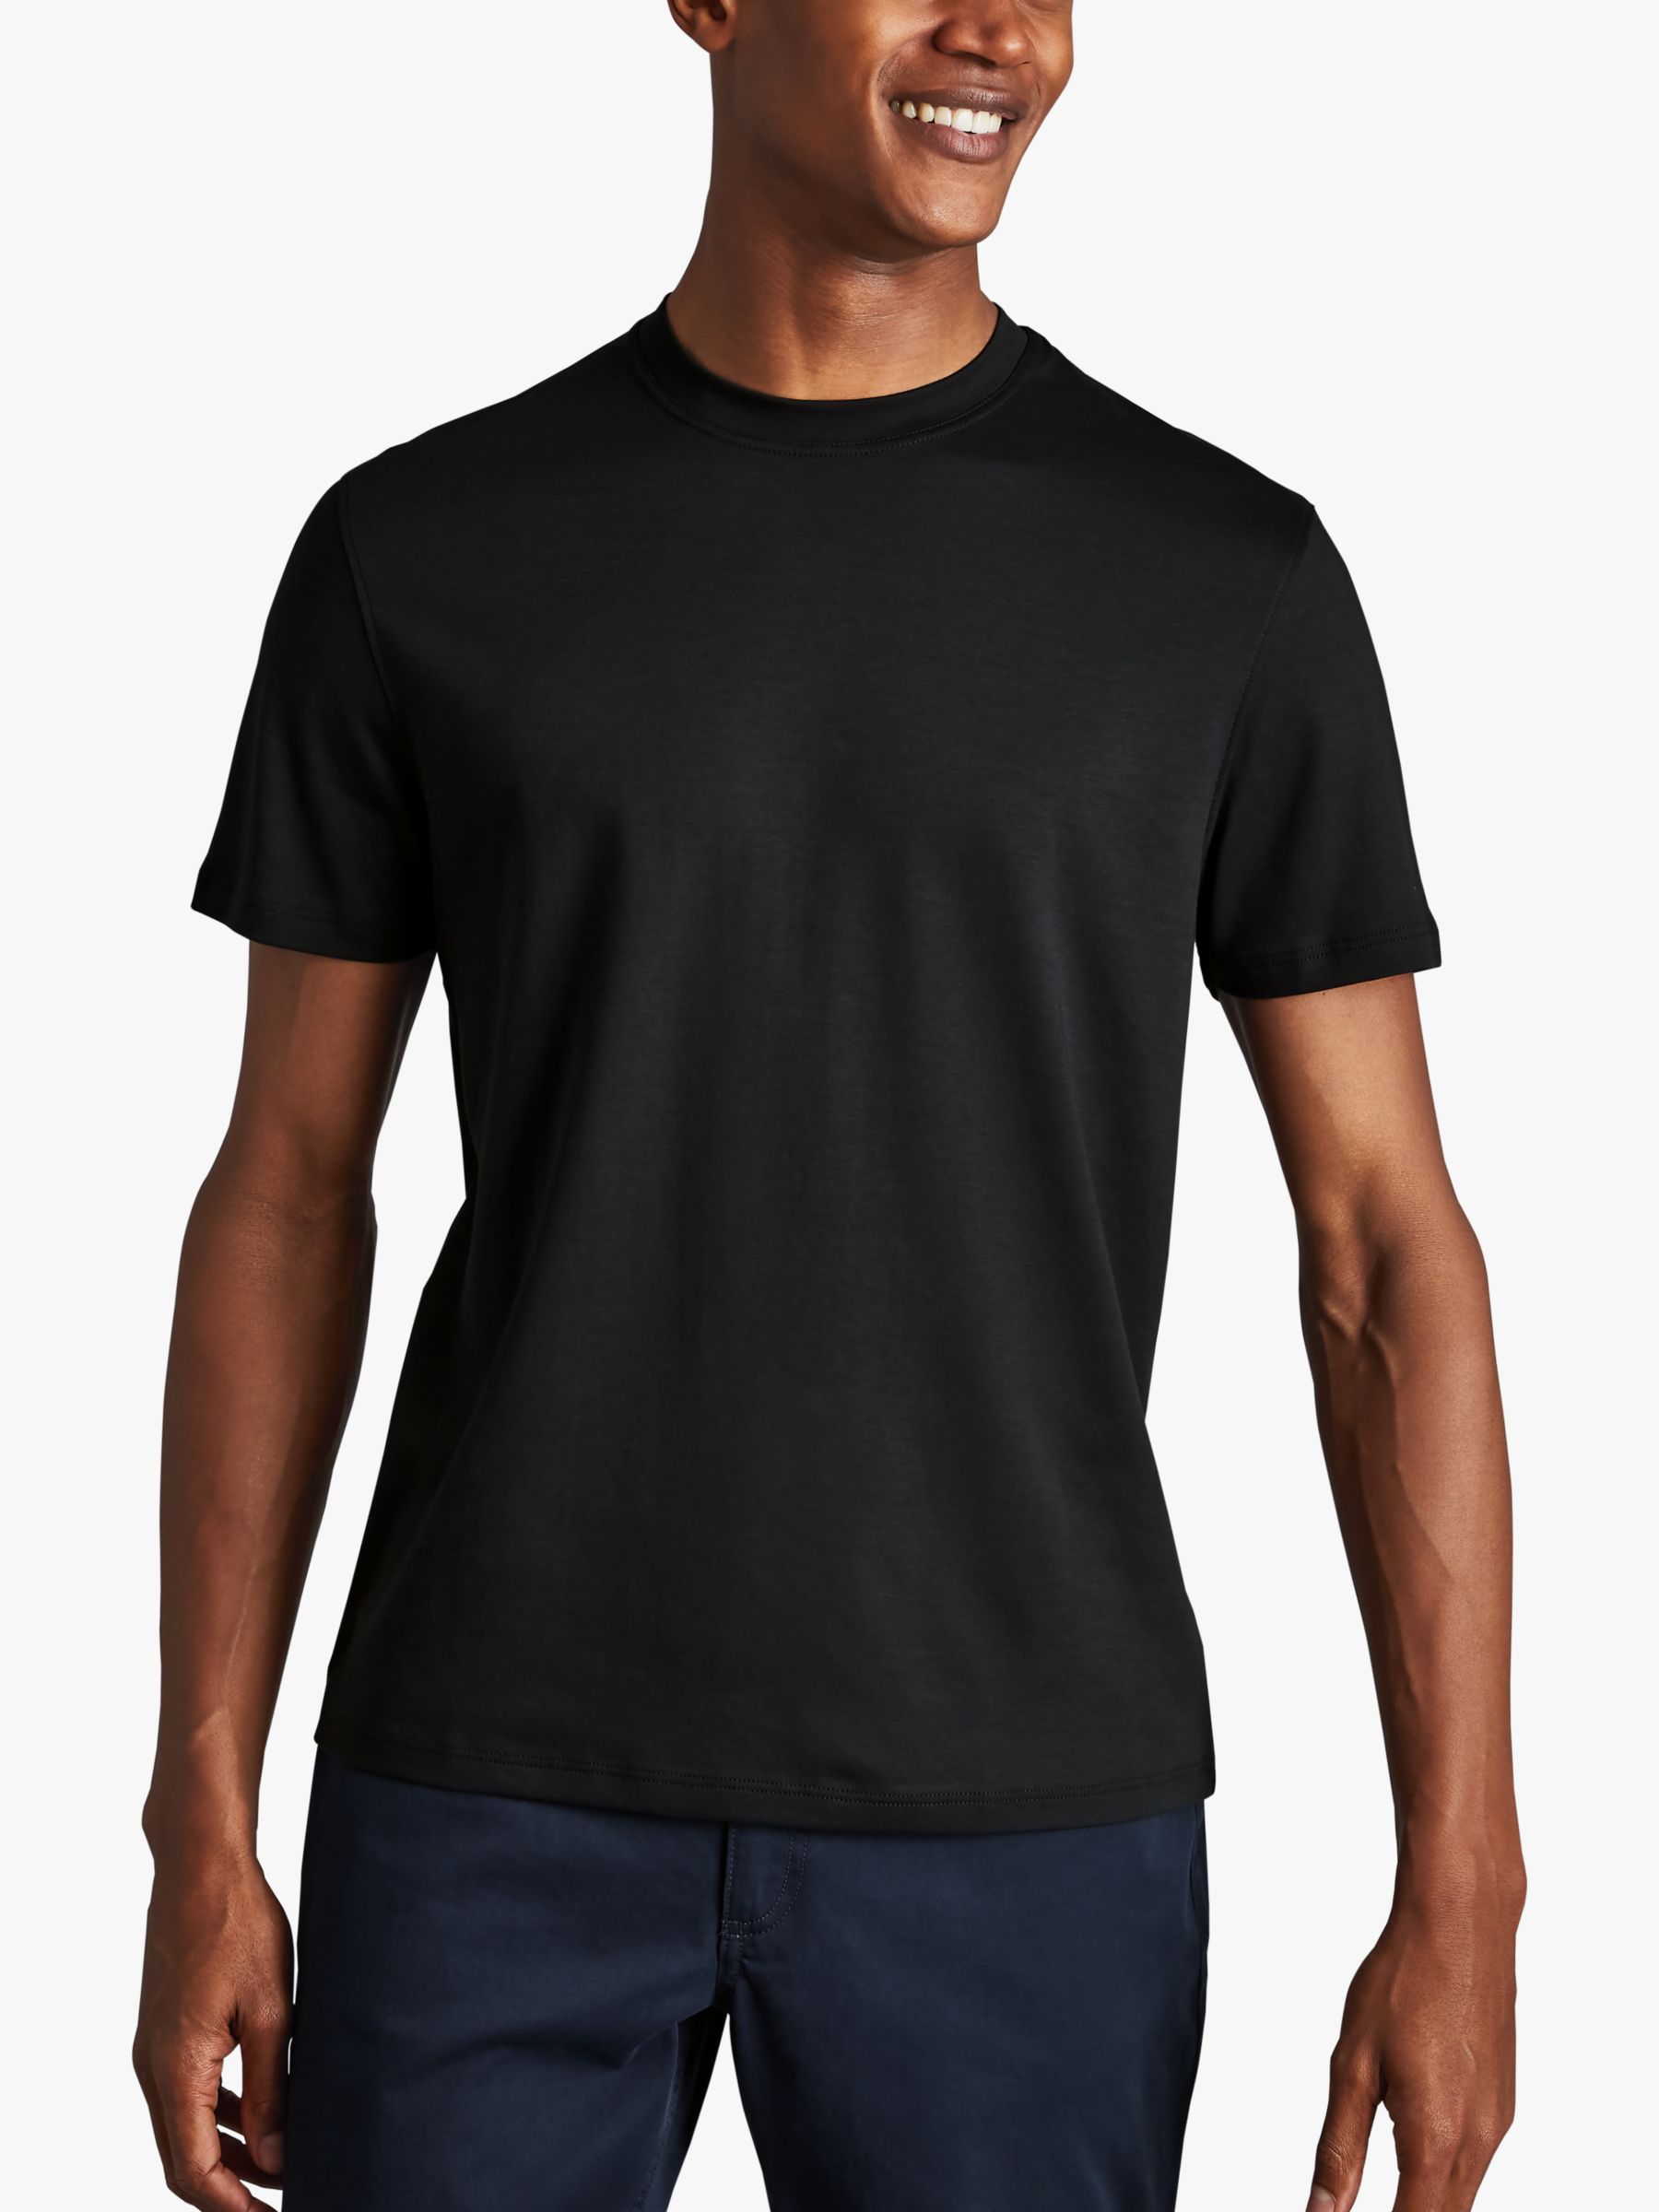 Charles Tyrwhitt Cotton Short Sleeve T-Shirt, Black, S